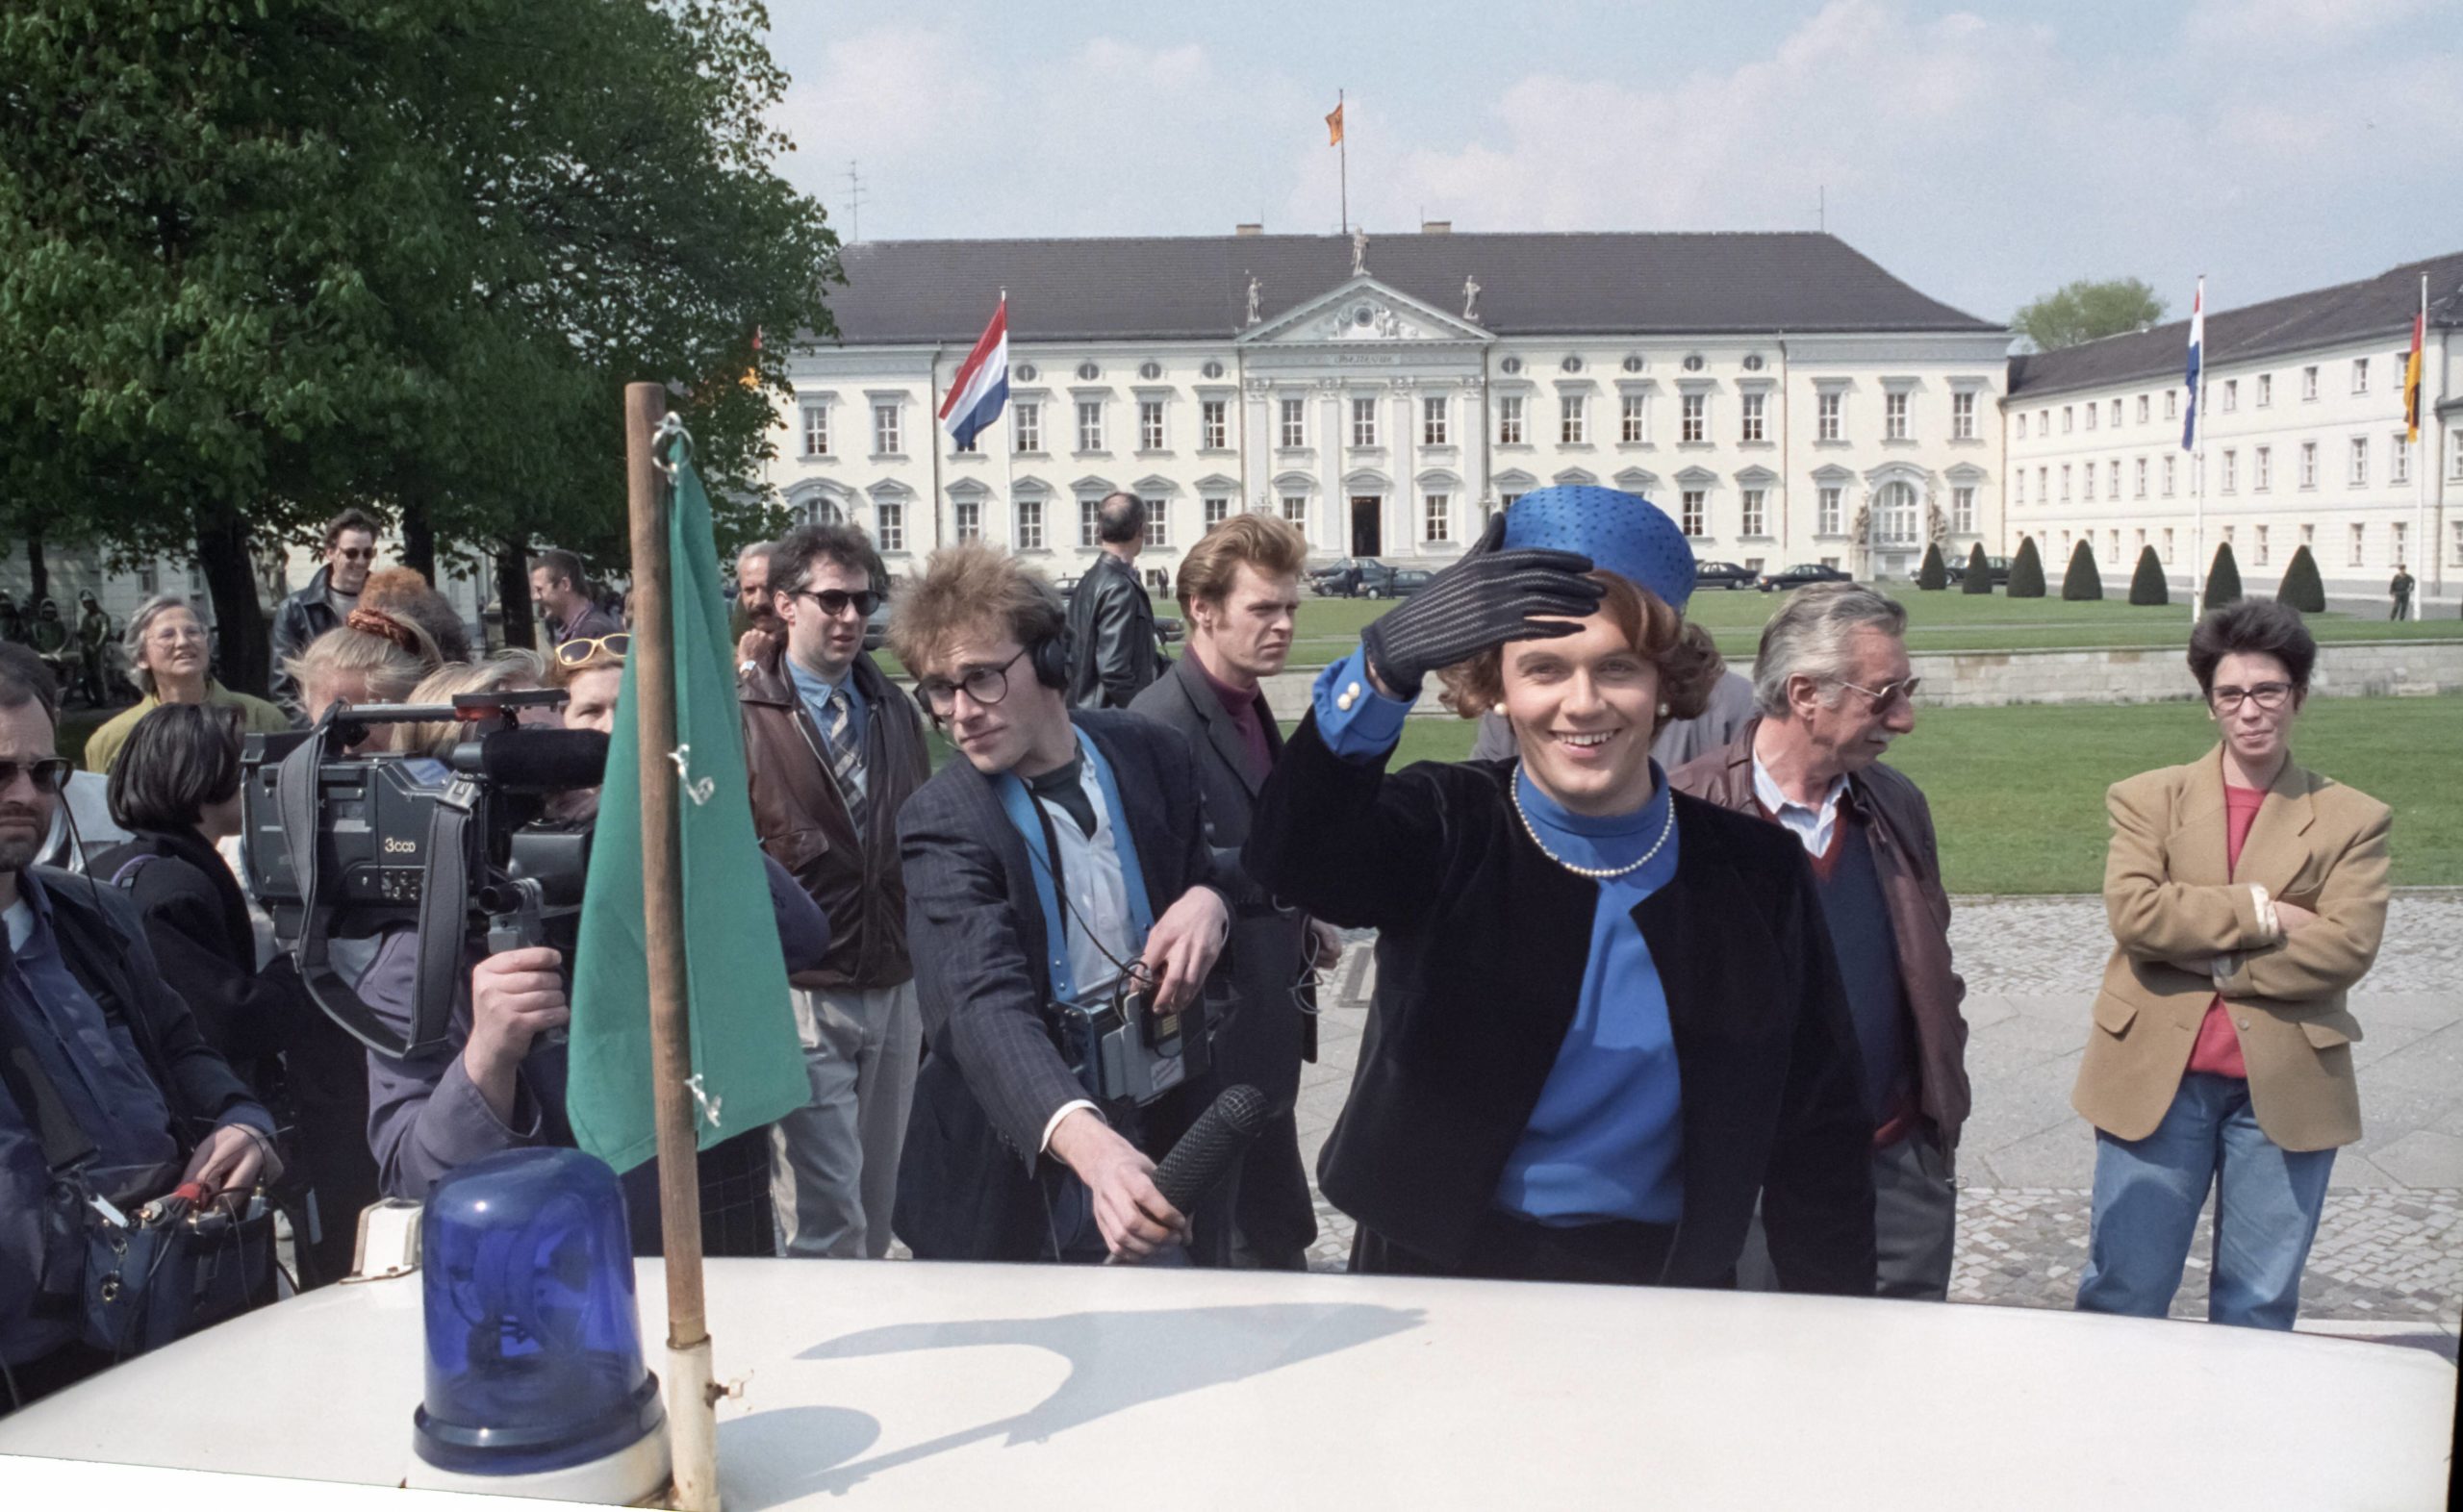 Hape Kerkeling winkt am 25. April 1991 als Königin Beatrix der Niederlande verkleidet vor dem Schloss Bellevue in Berlin. Foto: Imago/Jürgen Schwarz